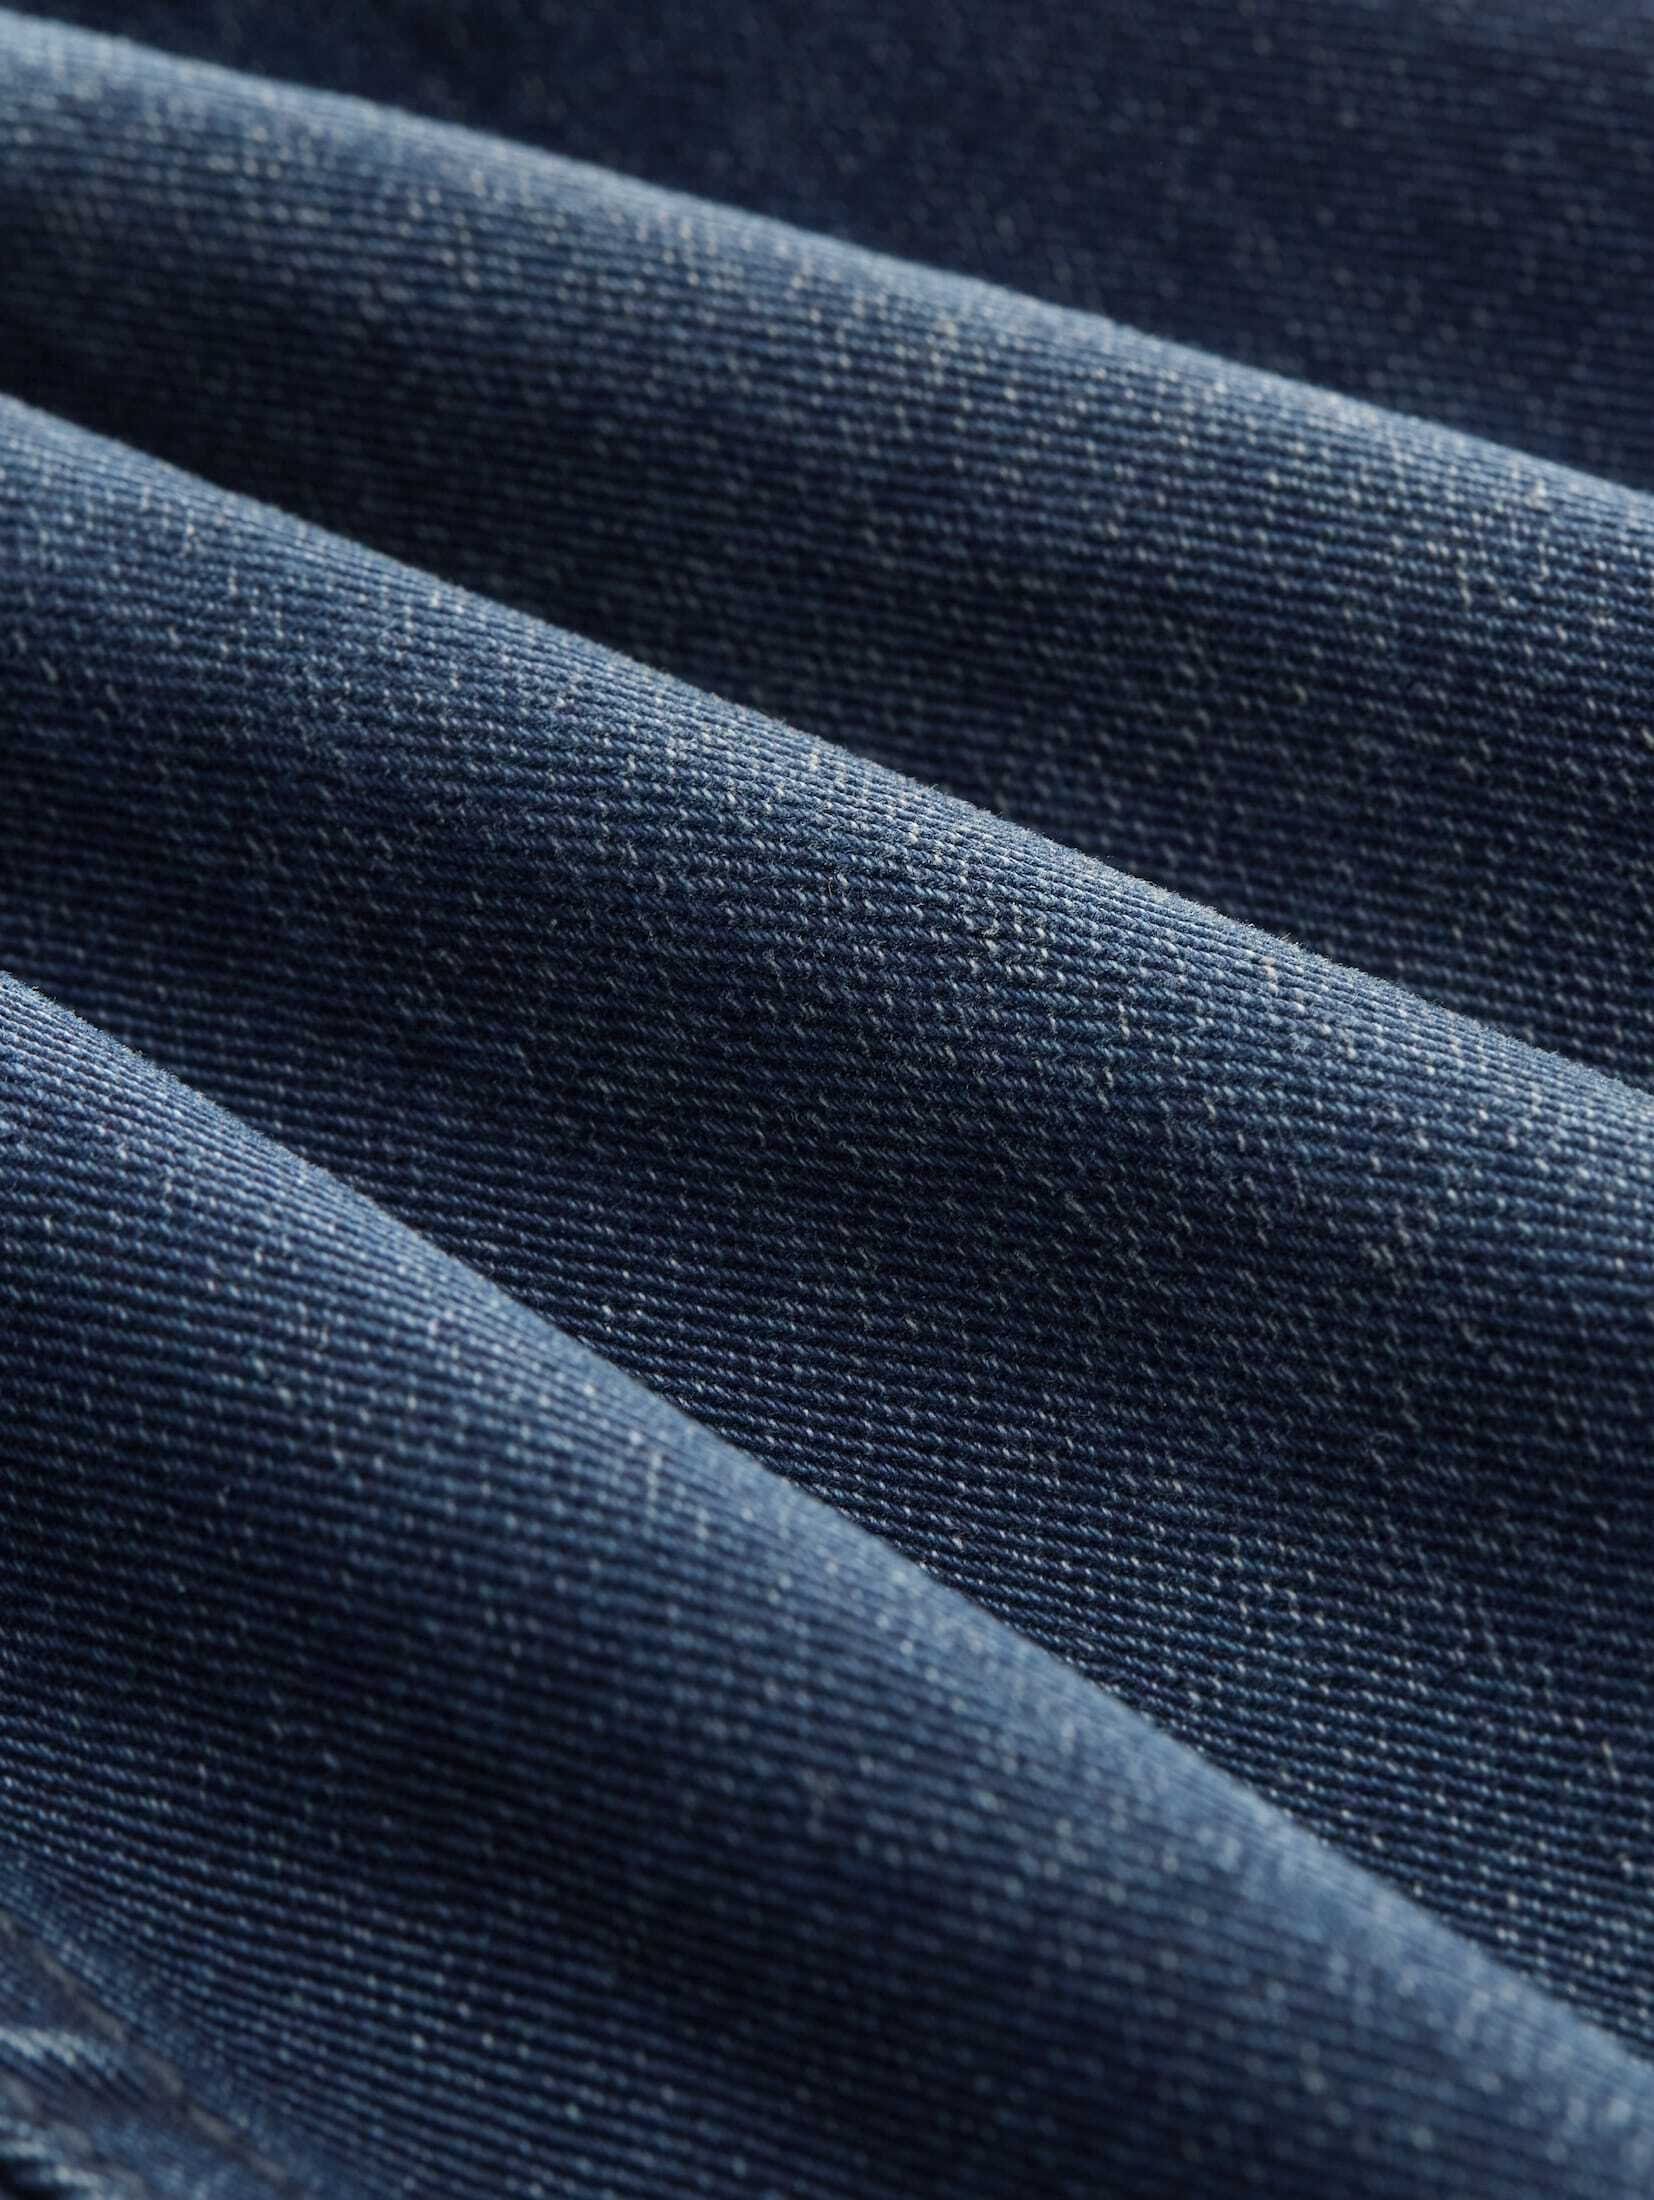 Taschendetails TOM mit Straight Straight-Jeans Jeans Marvin TAILOR